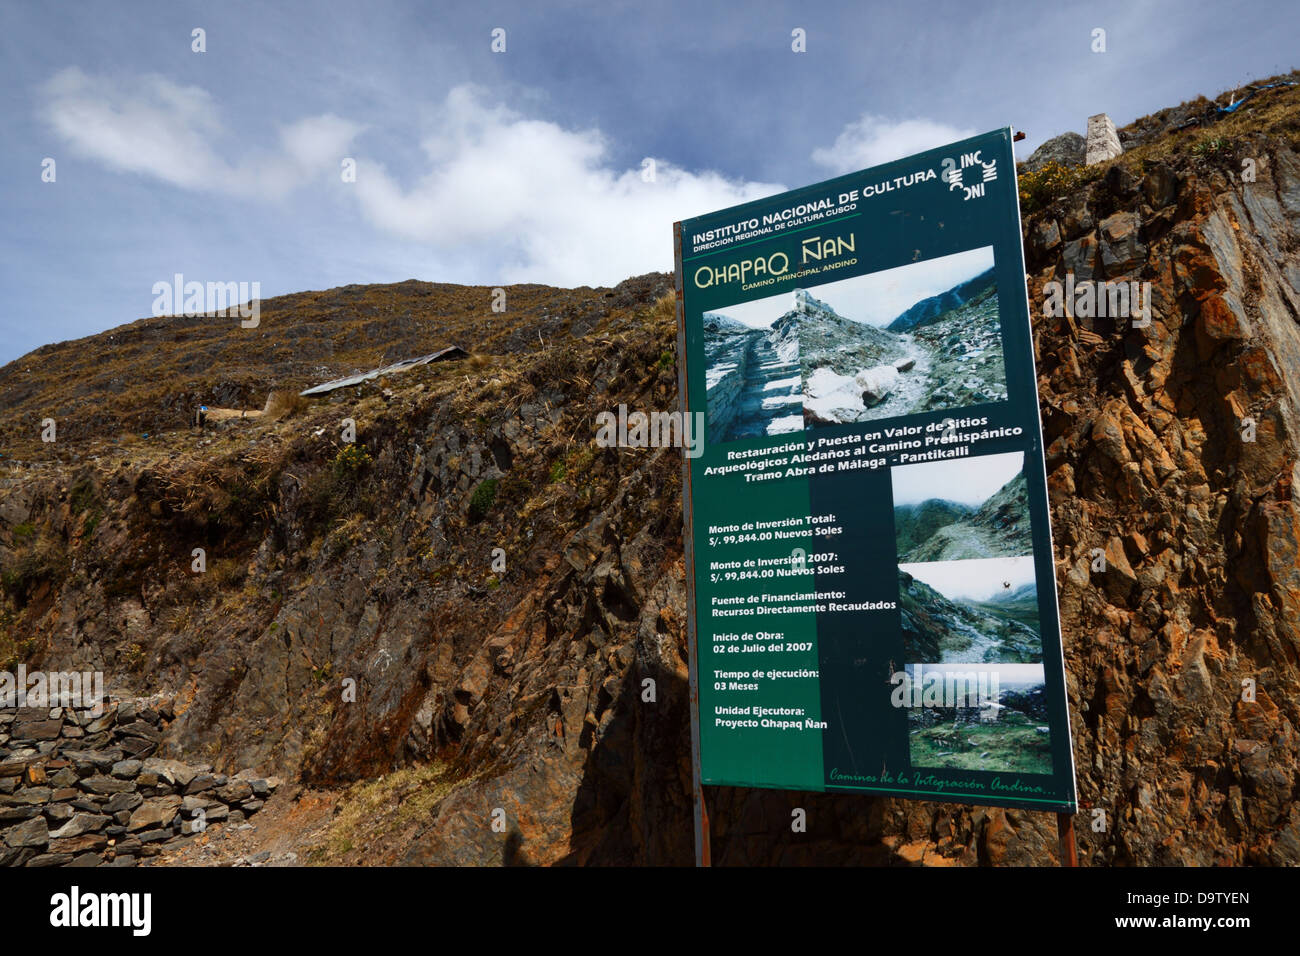 Sign with details about Qhapaq Ñan / Inca road restoration project and financing at Abra Malaga Pass, near Ollantaytambo, Peru Stock Photo